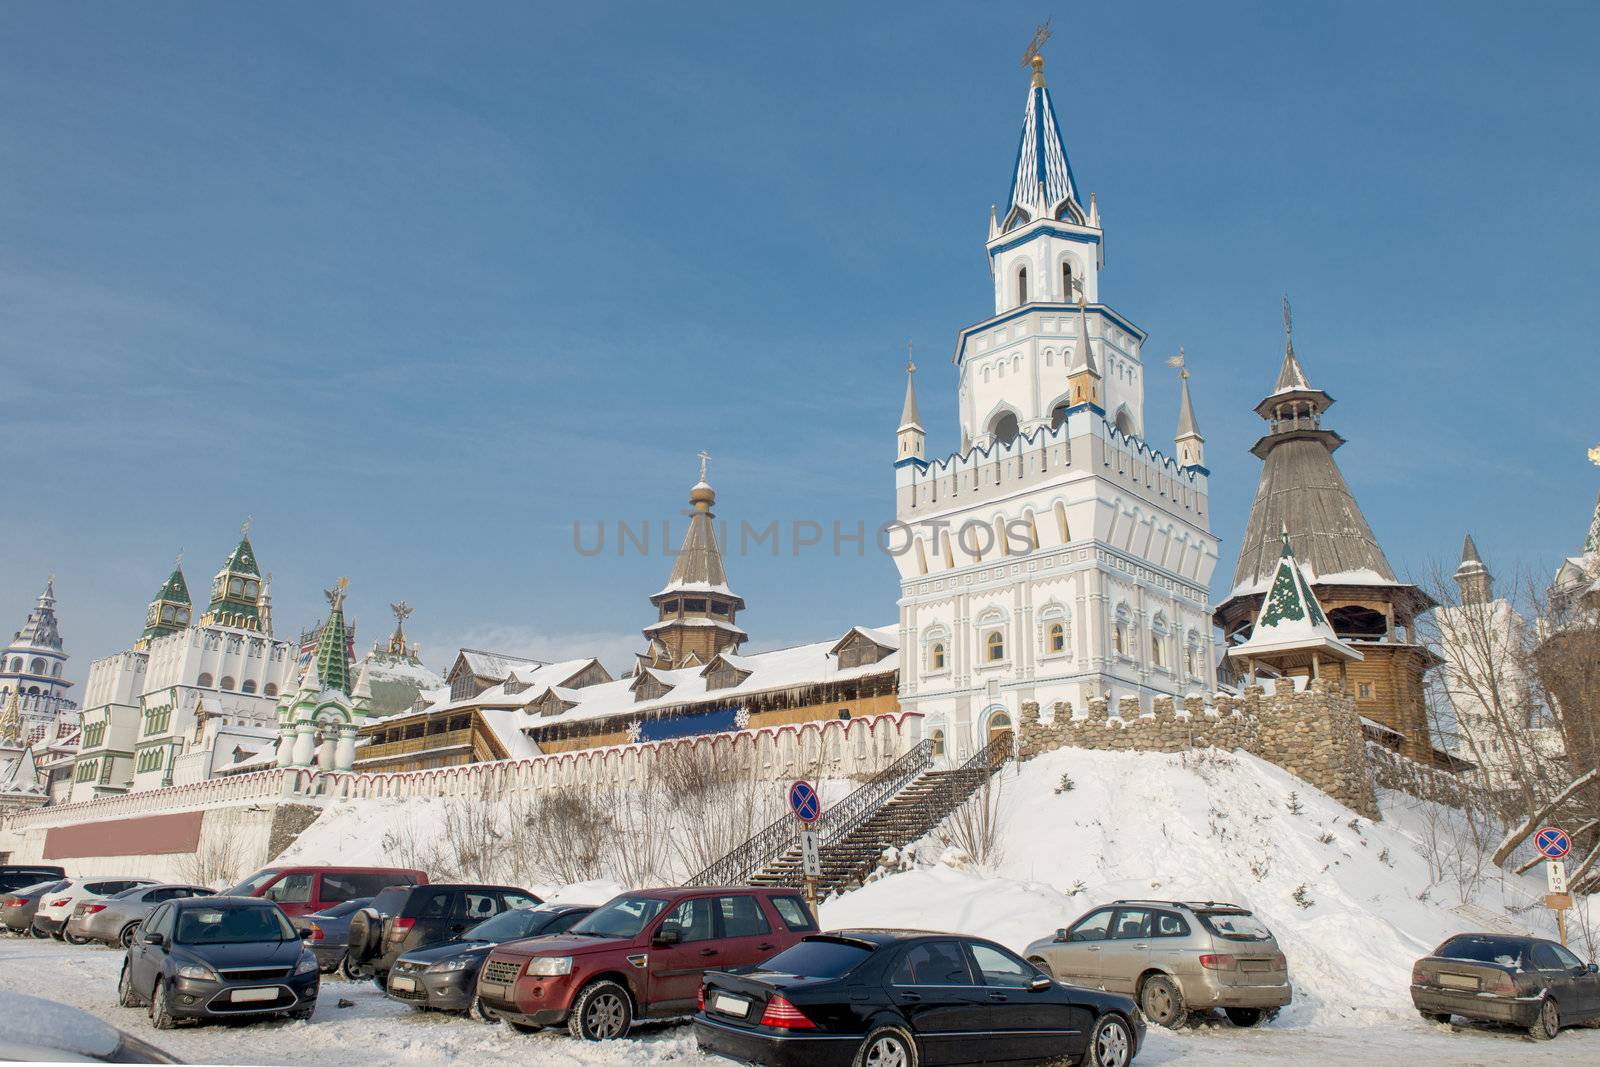 Izmaylovsky Kremlin by Alenmax